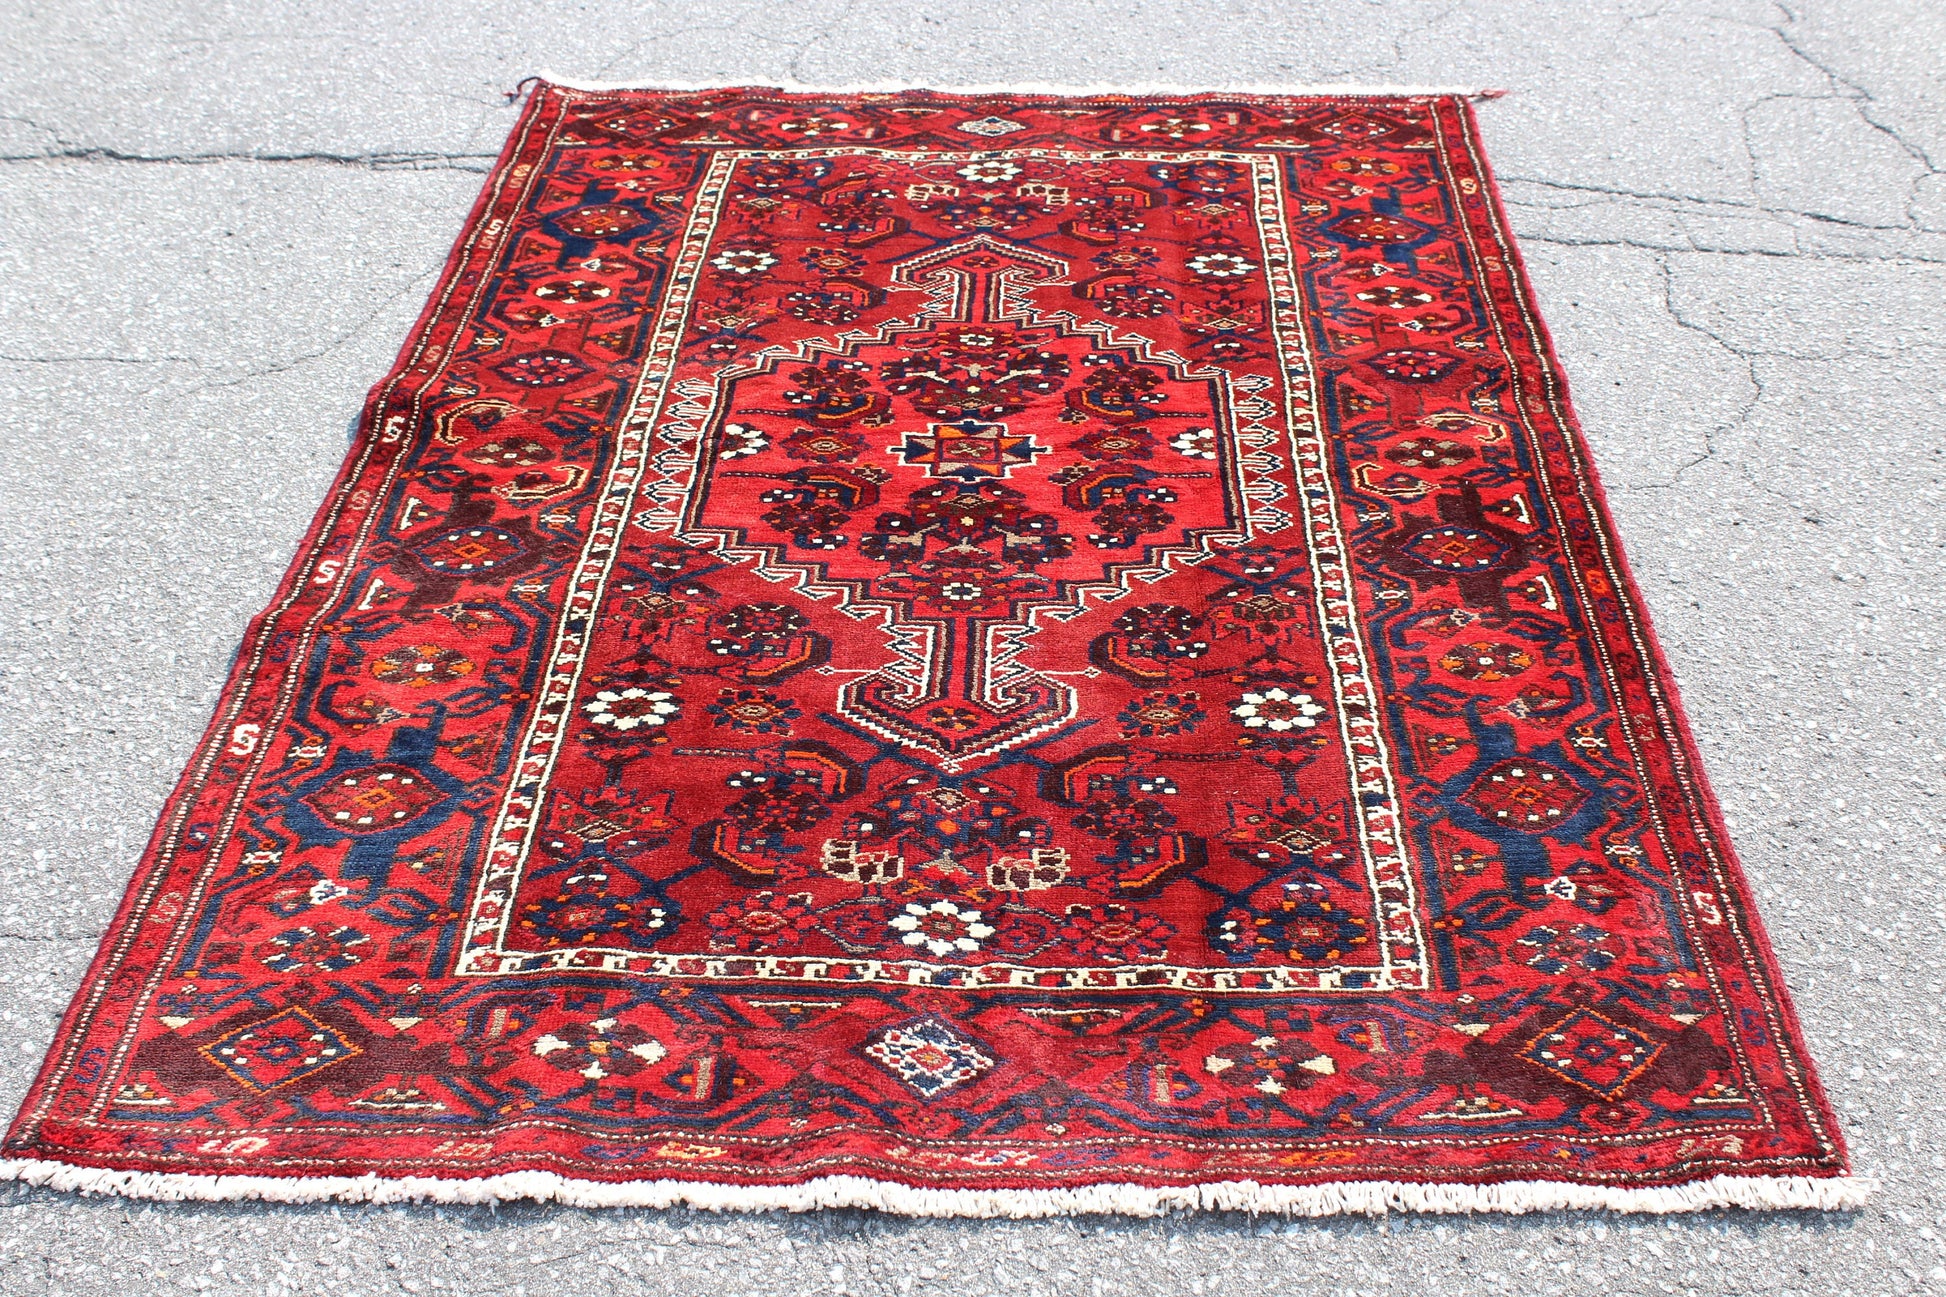 Bright Red 4x7 Vintage Tribal Persian Style Handmade Wool Rug